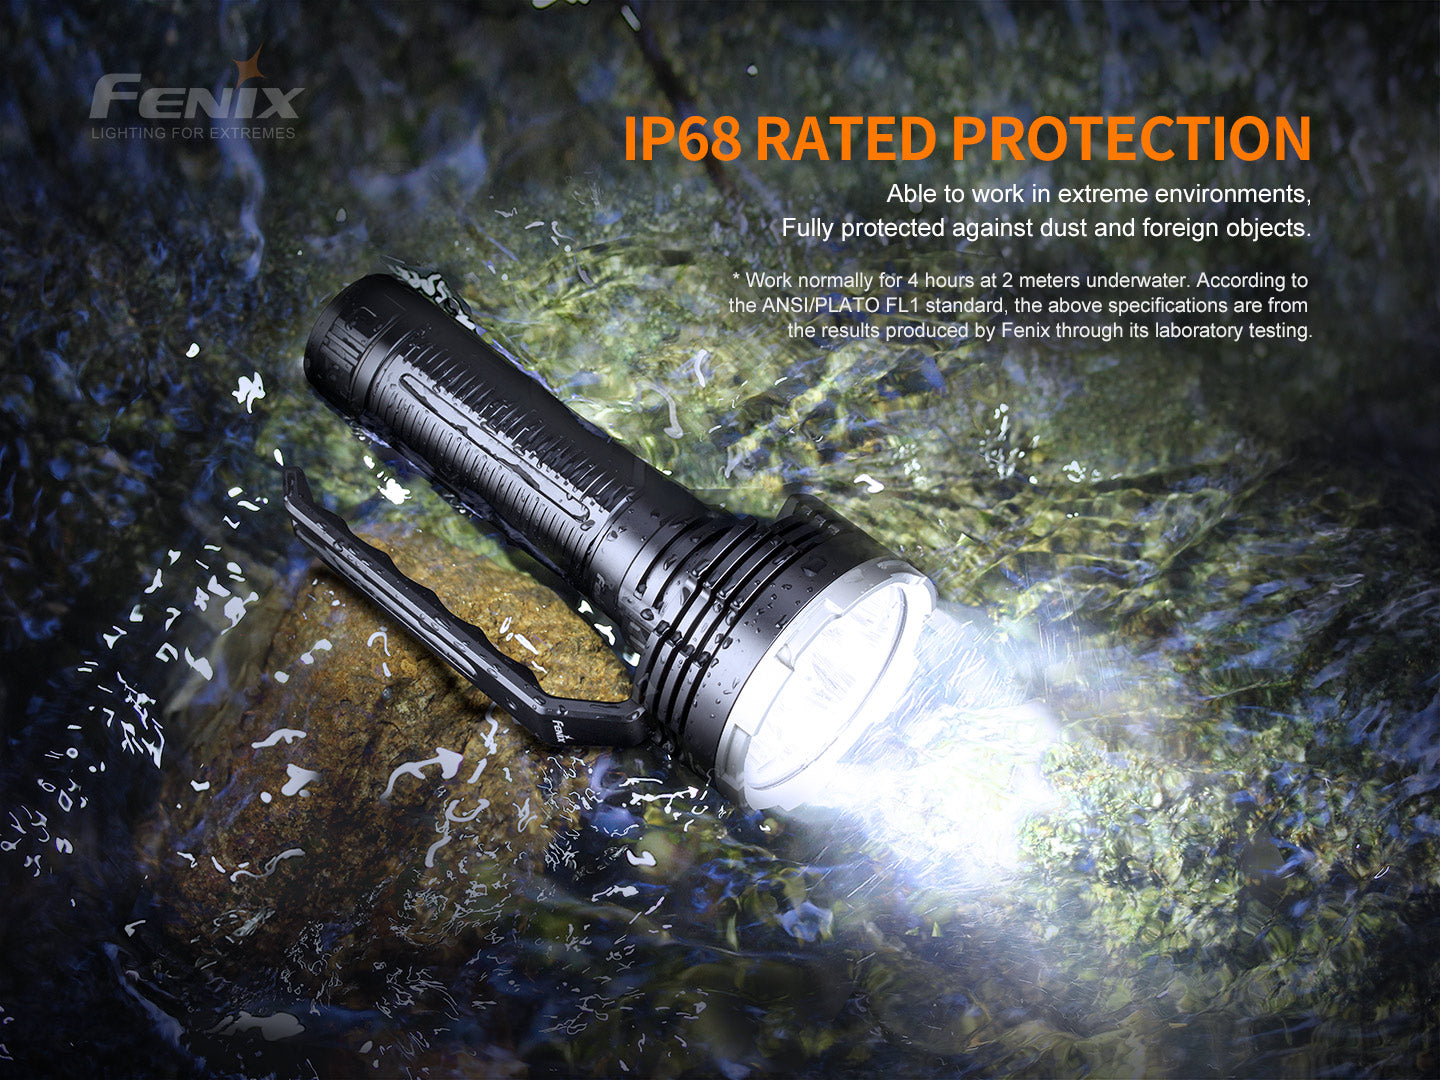 Fenix LR80R 18,000 Lumens Flashlight